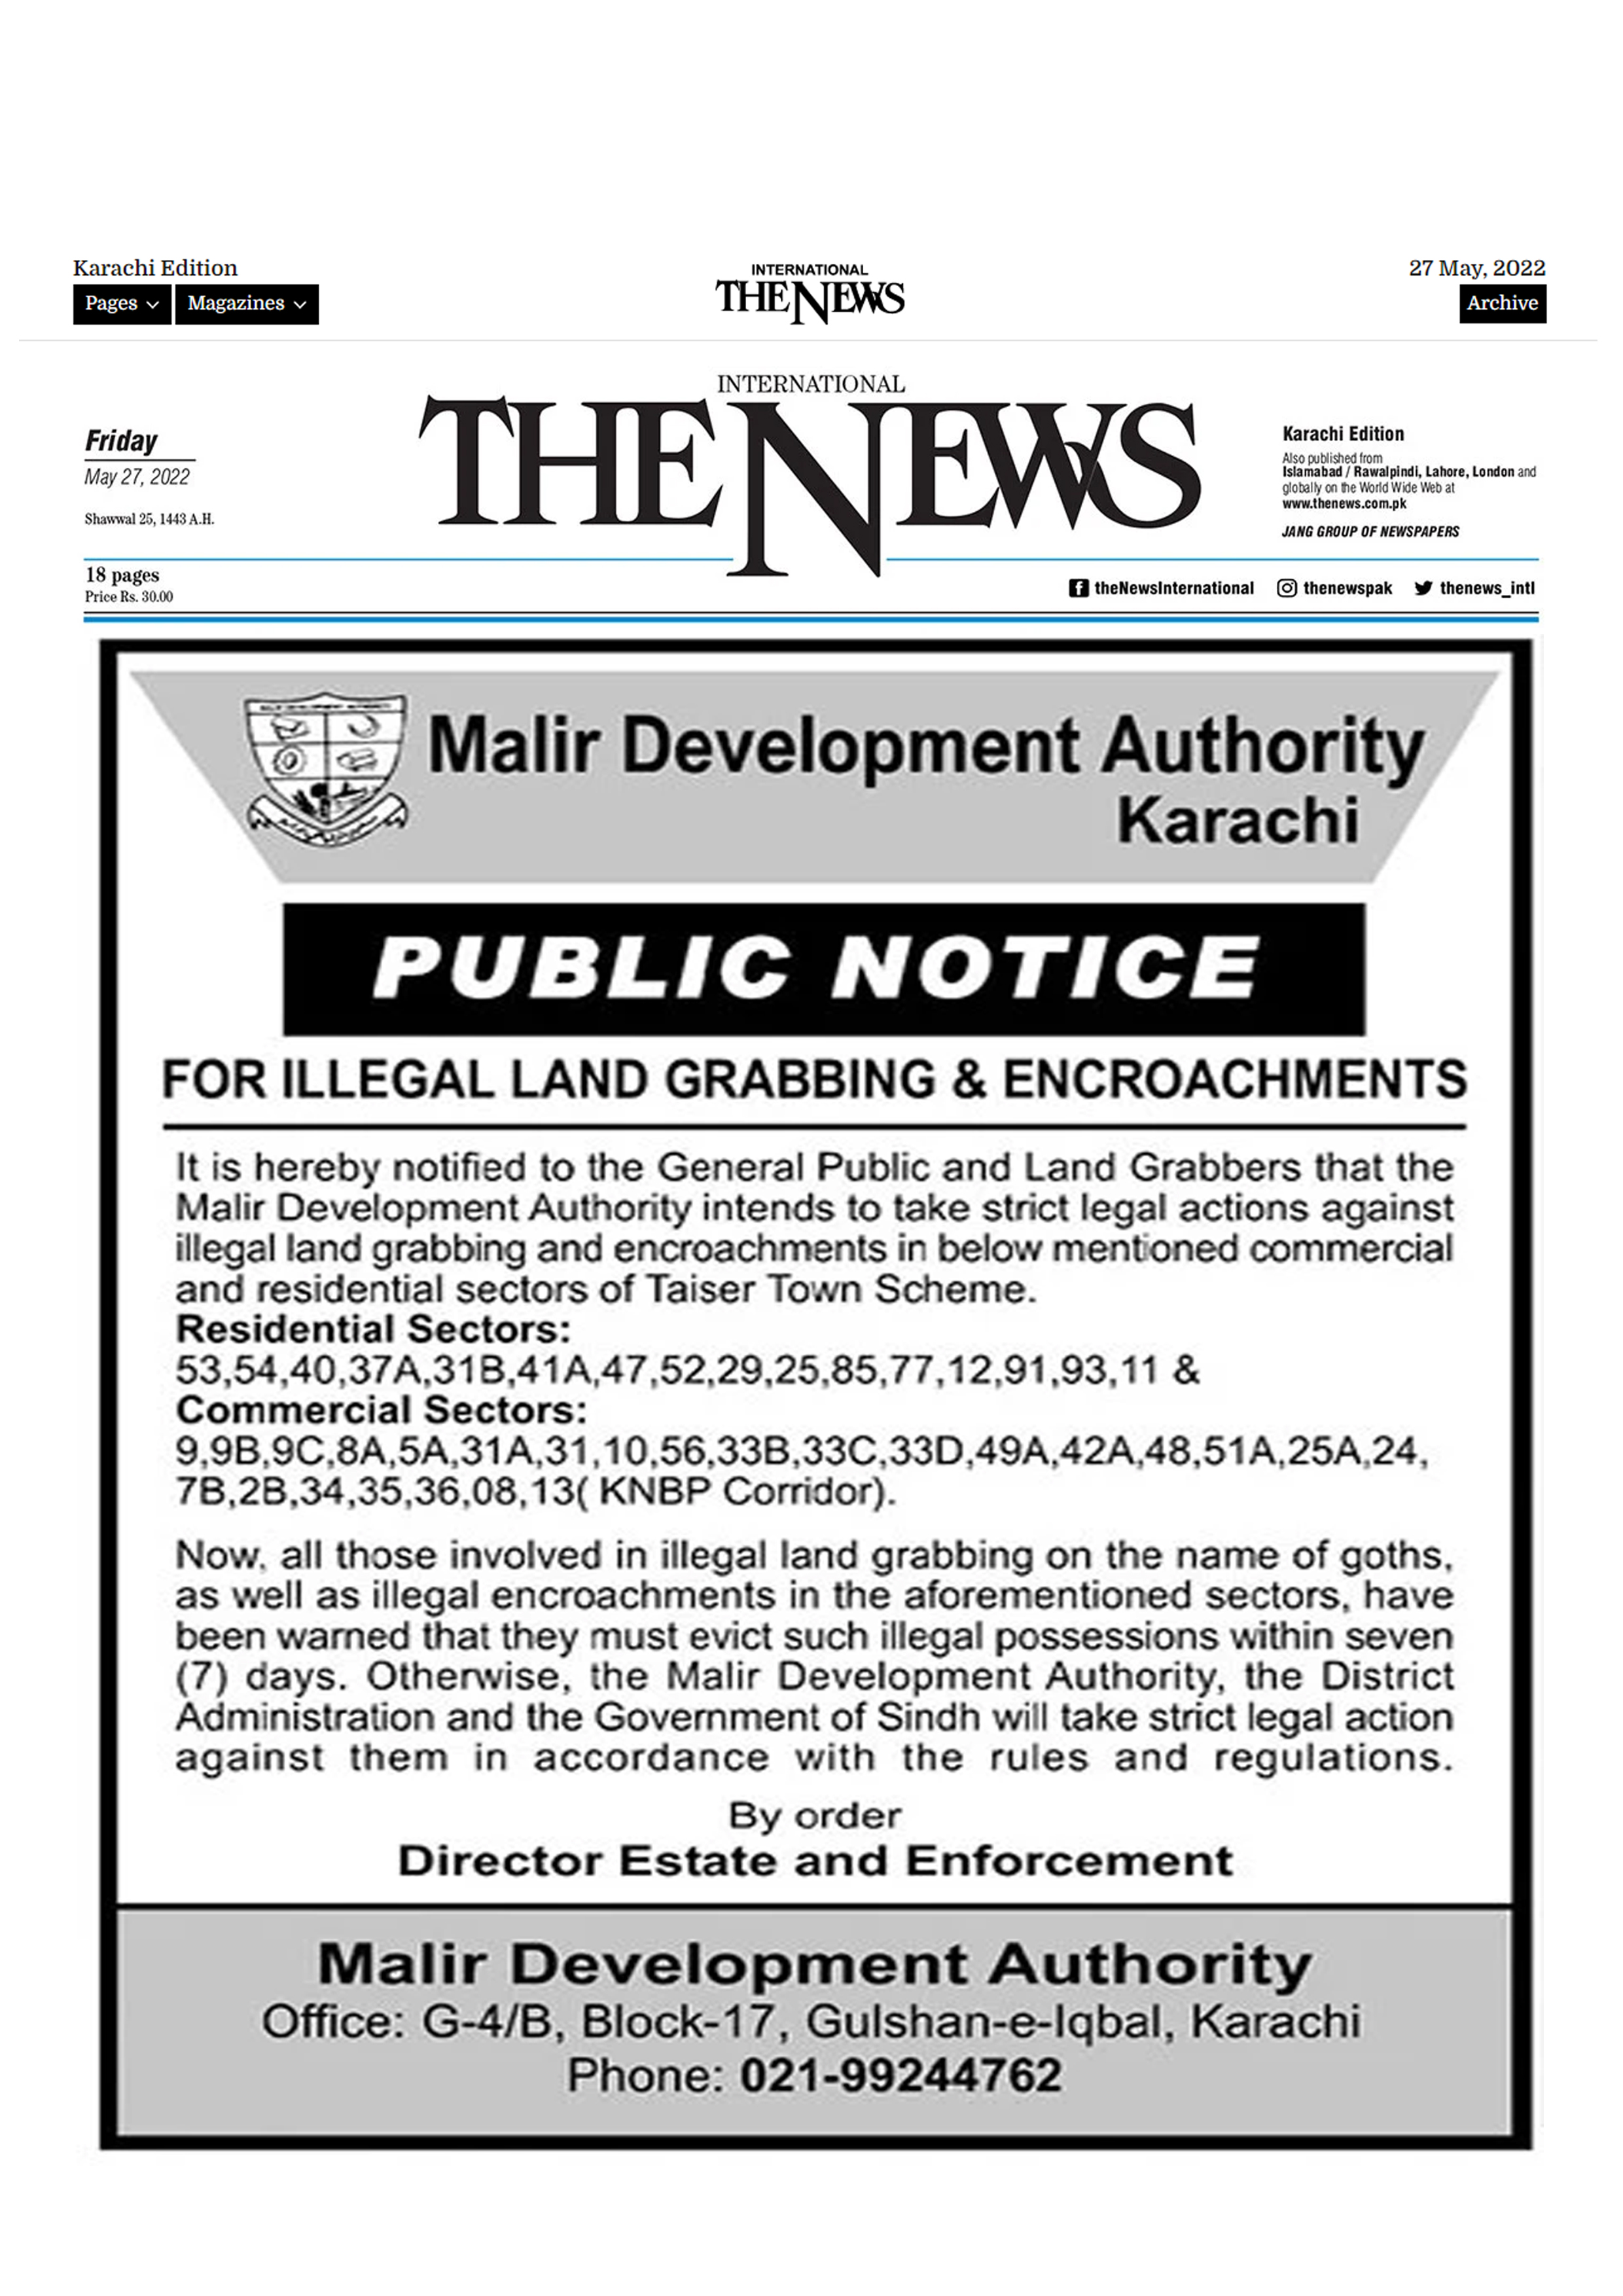 Public Notice For Illegal Land Grabbing & Encroachments